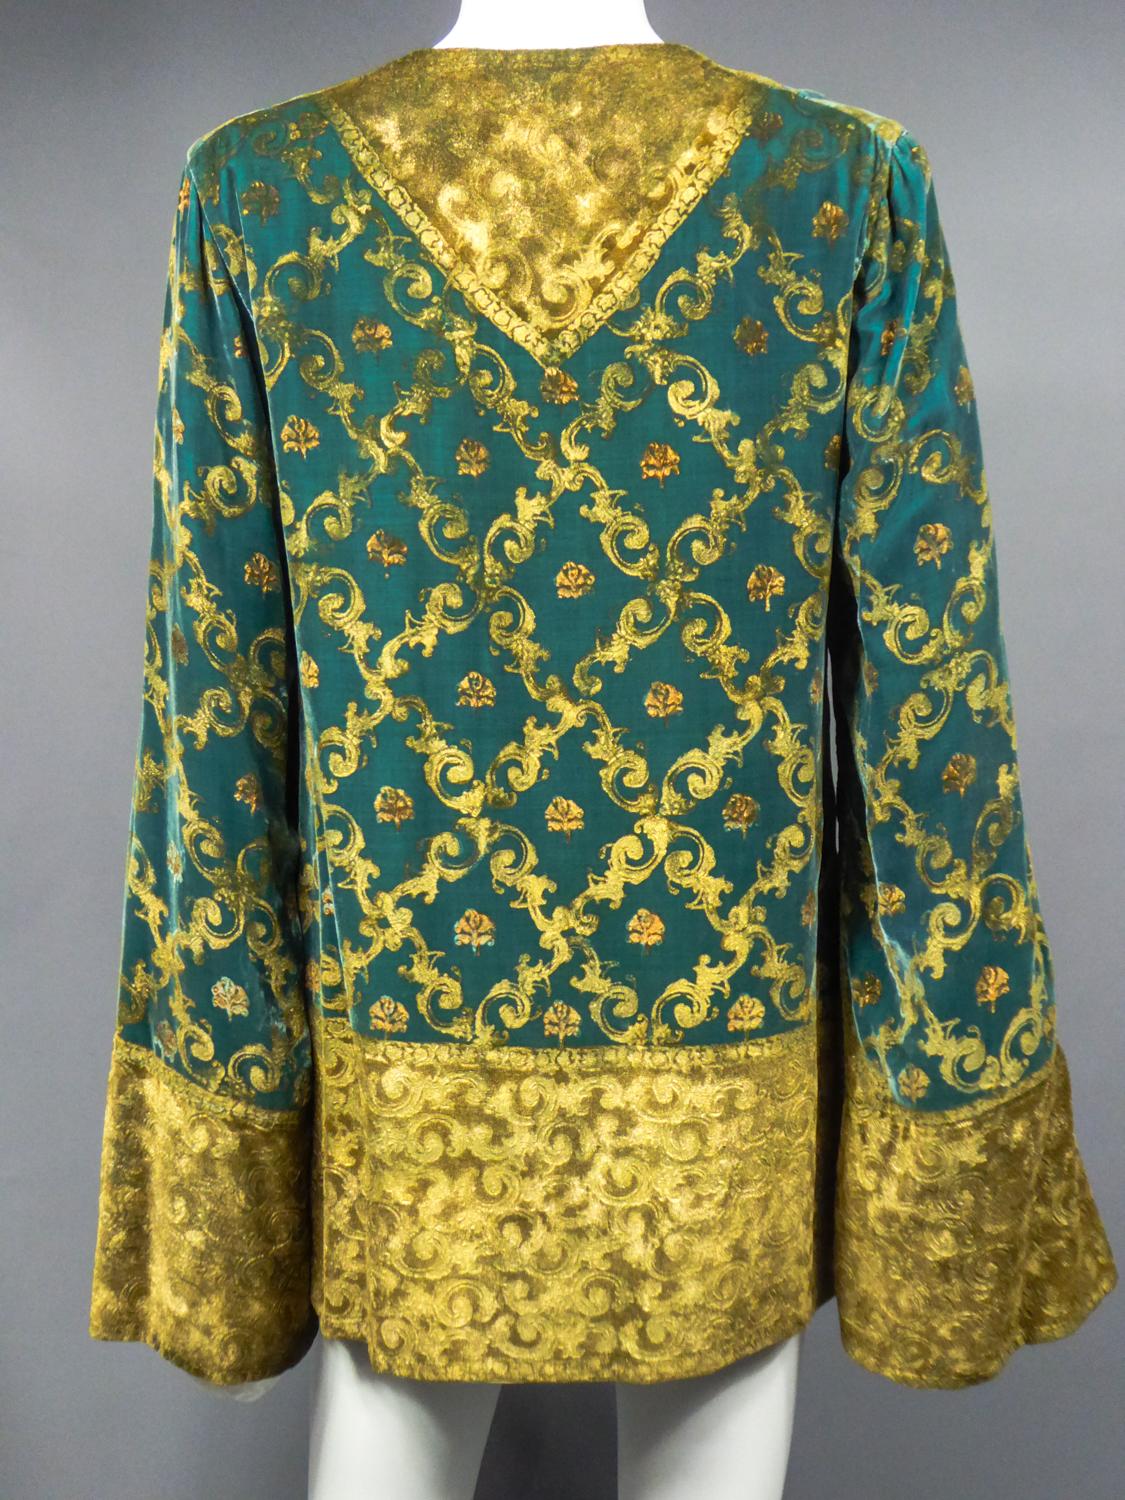 Maria Monacci Gallenga Evening Jacket in Gold Painted Velvet Circa 1930 6